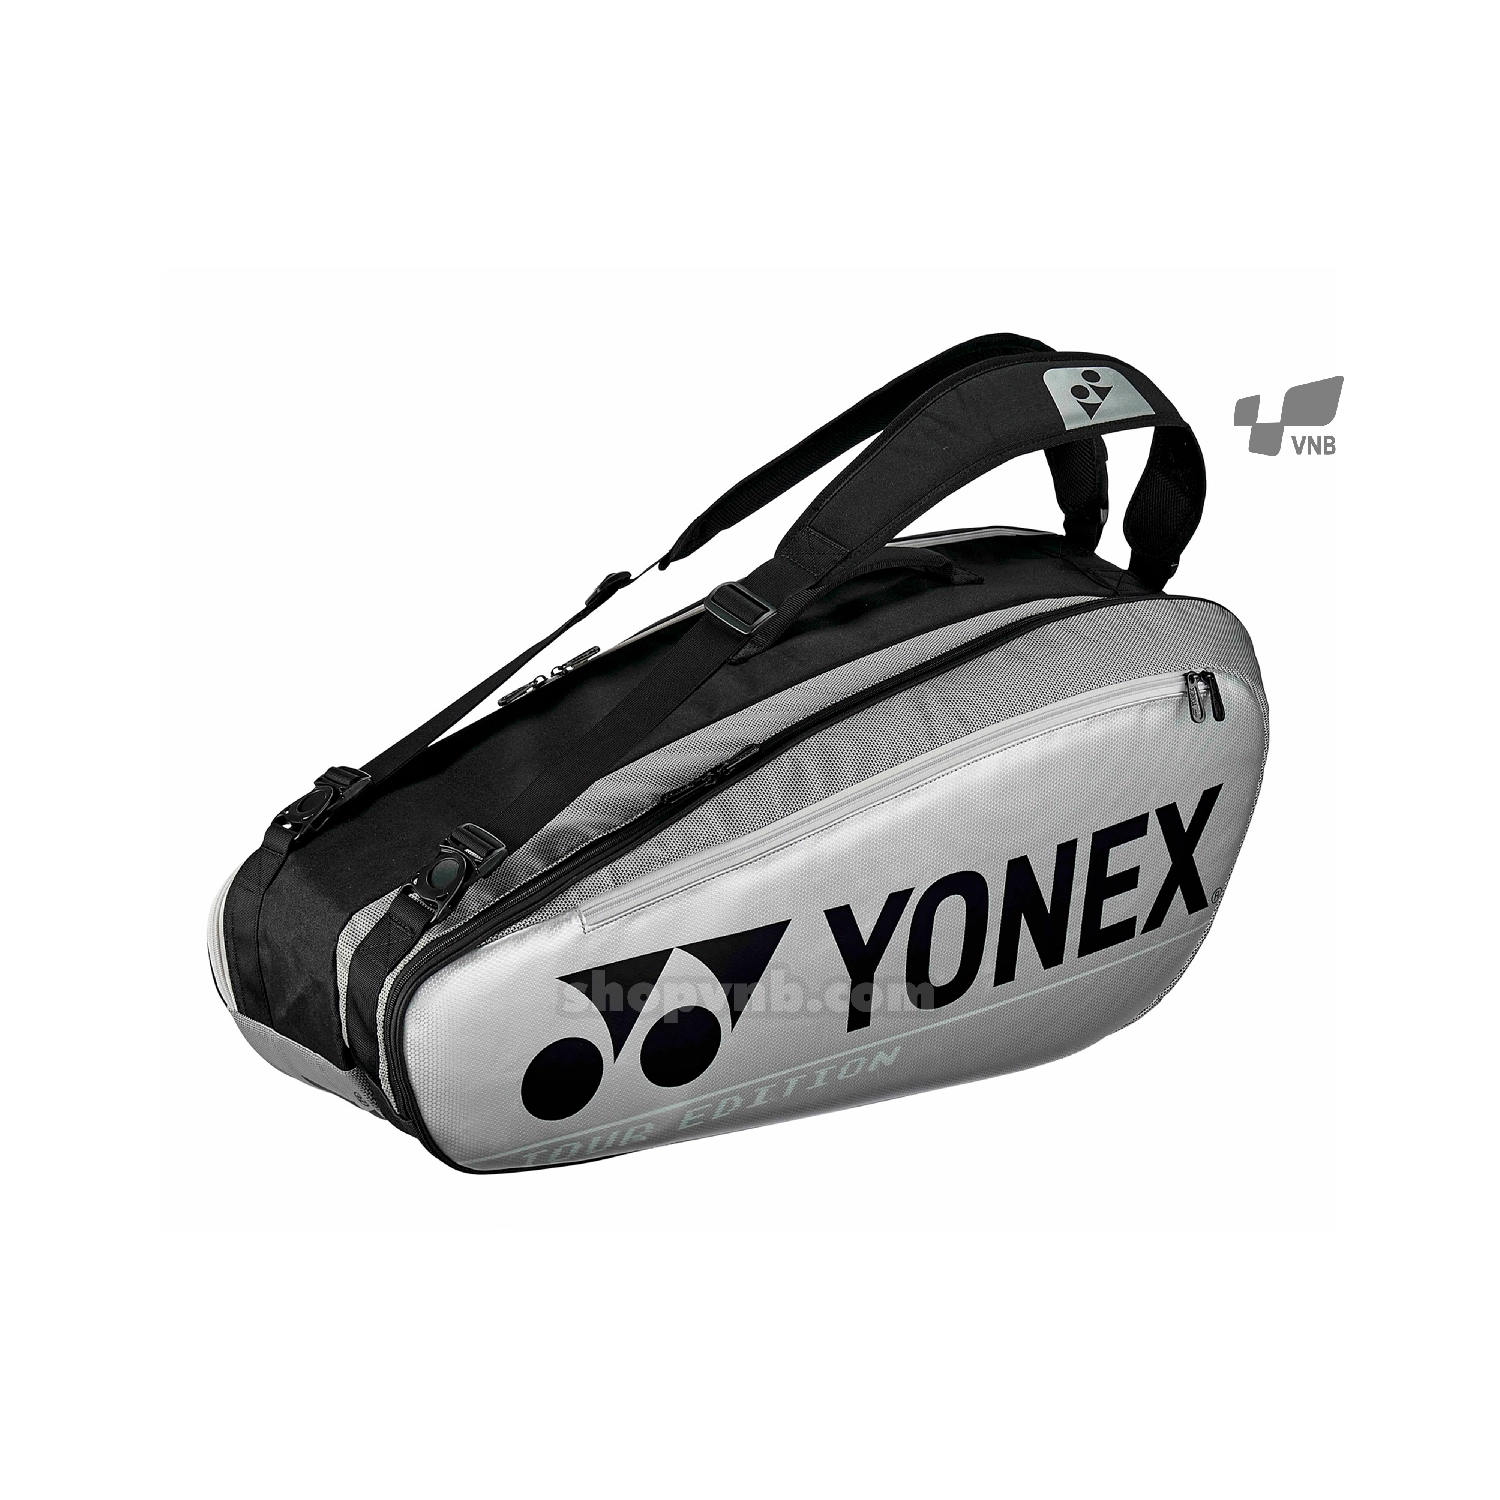 Yonex golf bag | eBay